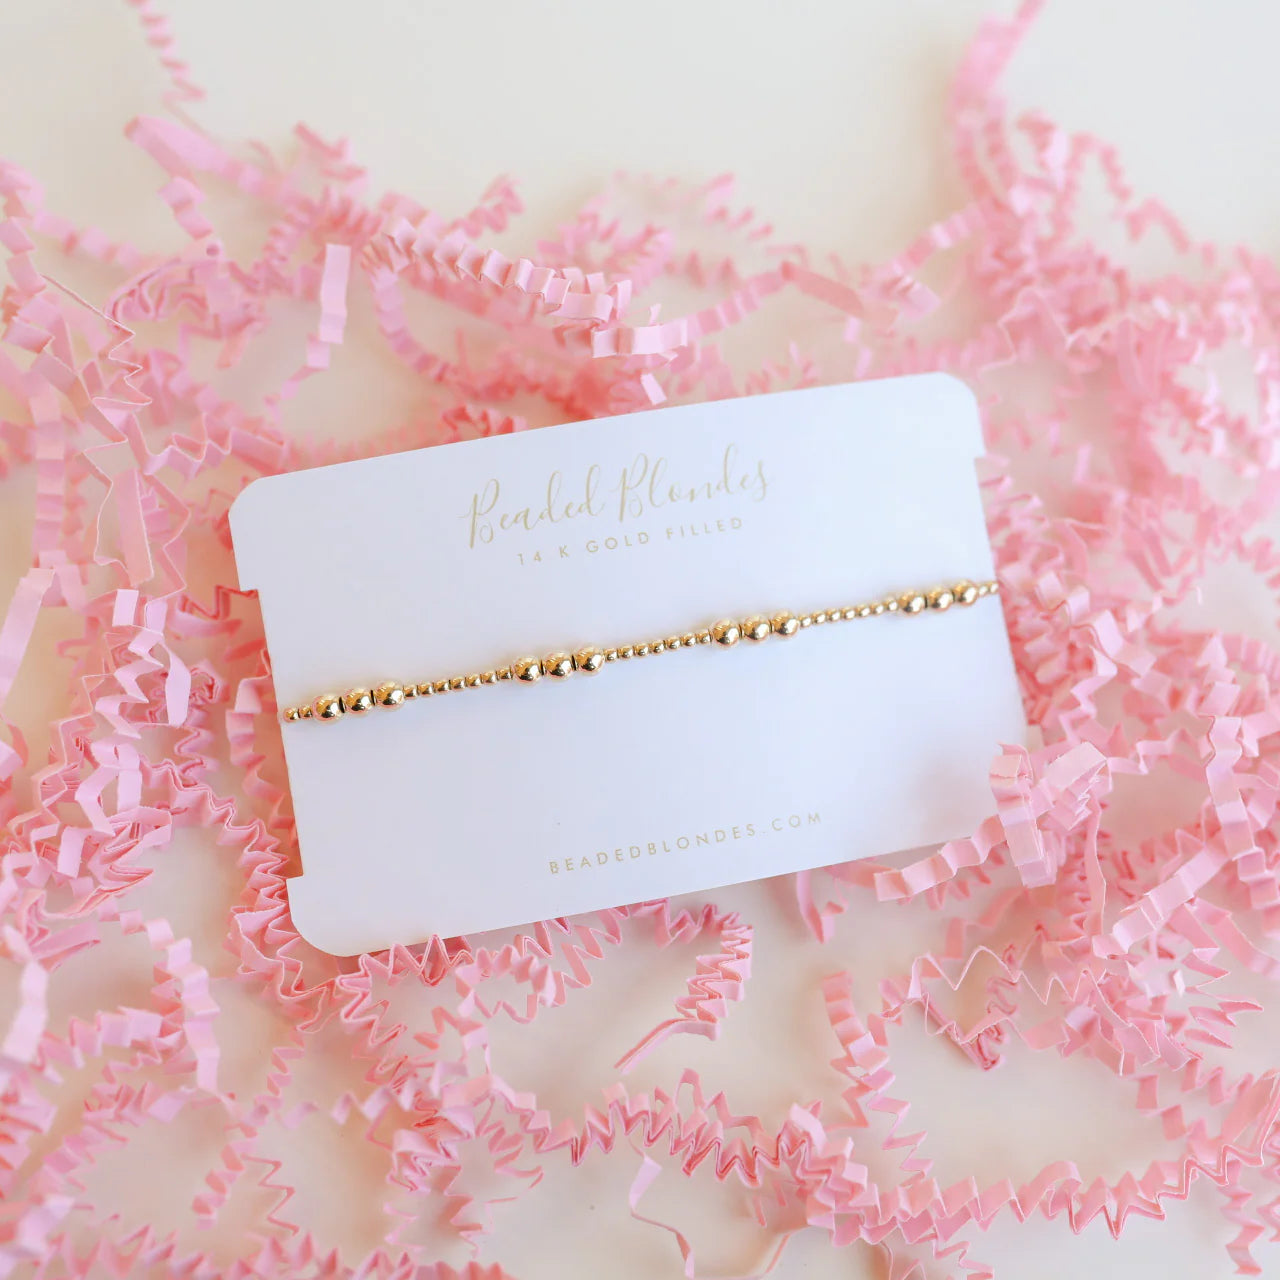 Beaded Blondes | ILY Gold Bracelet - Giddy Up Glamour Boutique